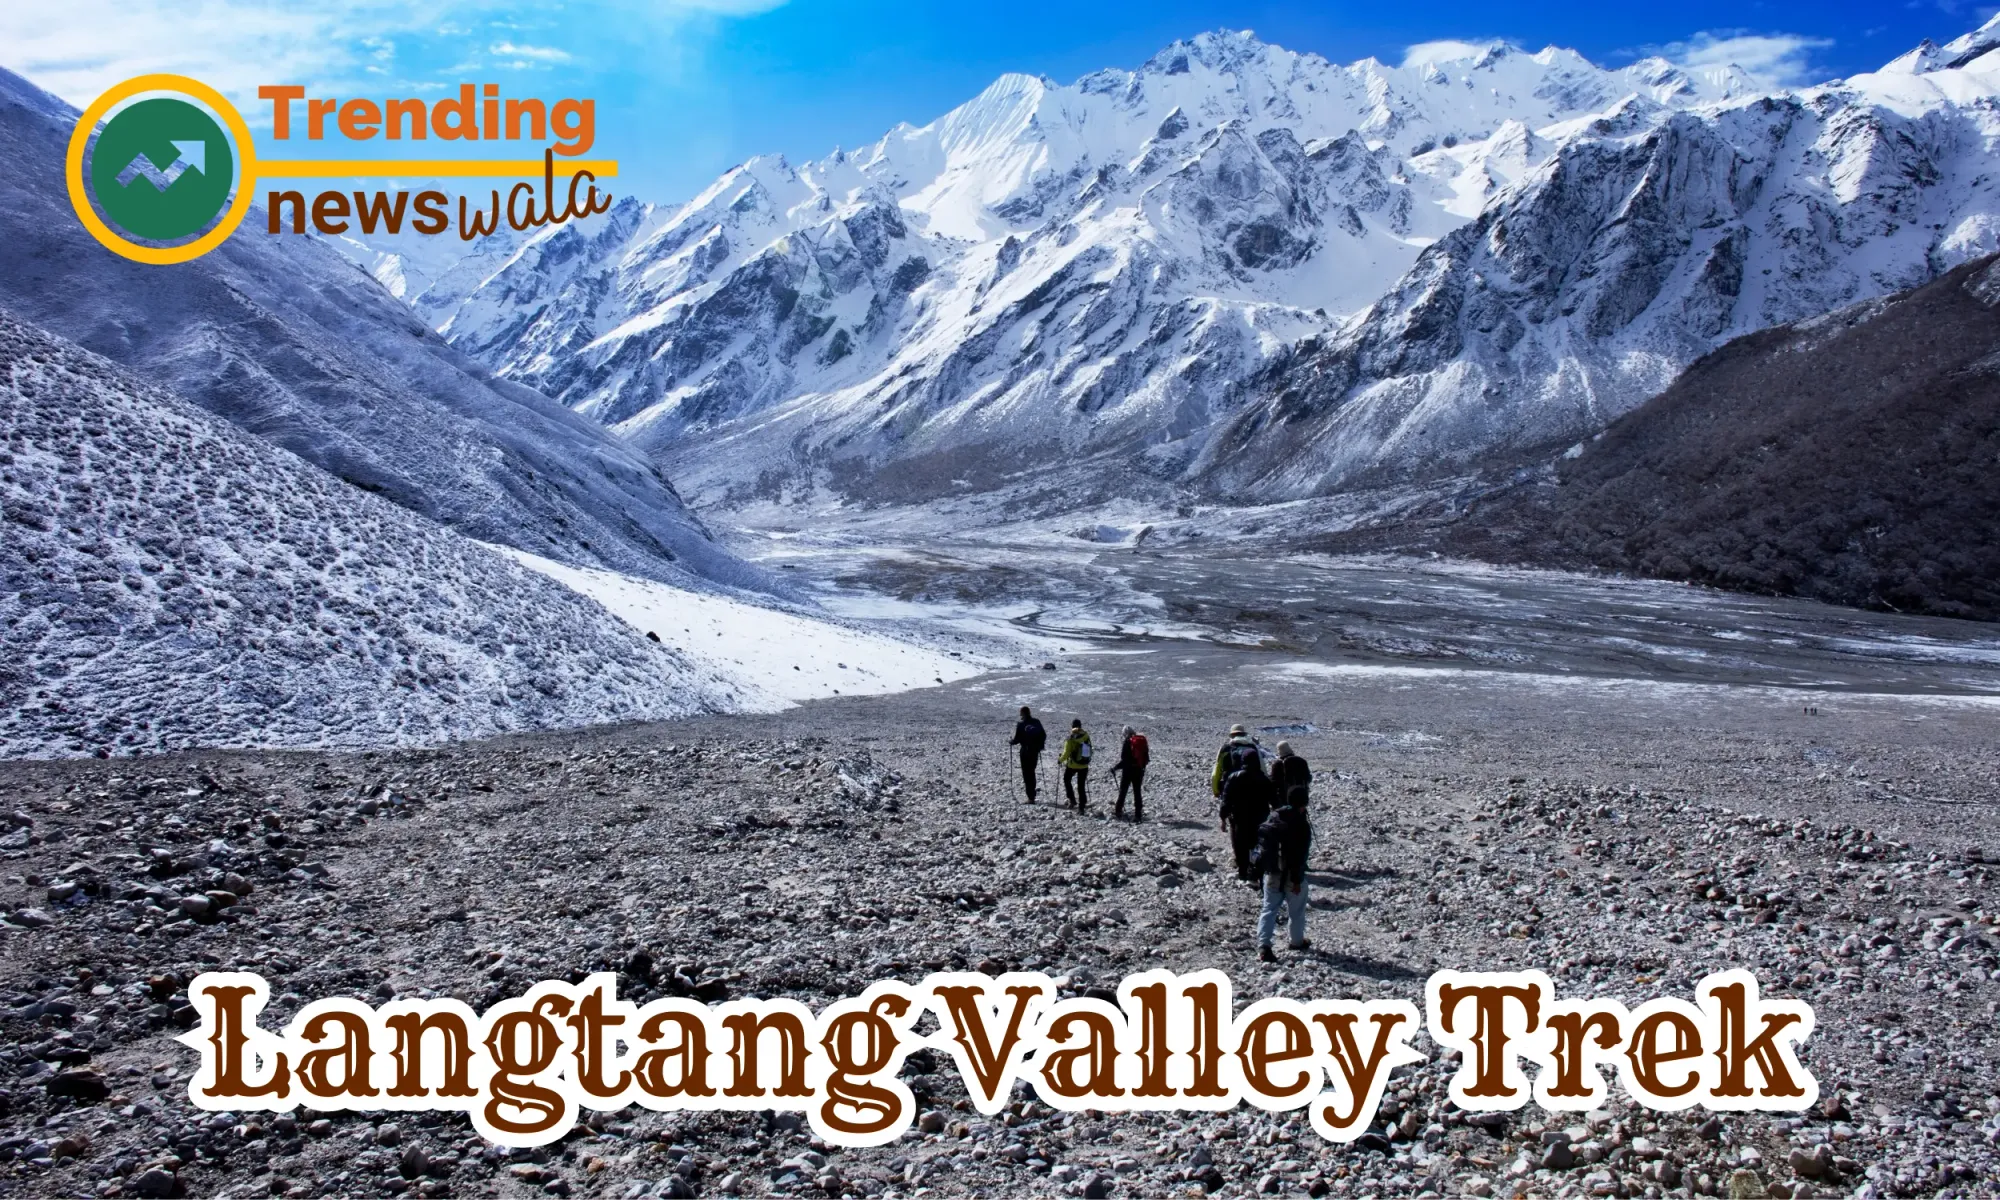 The Langtang Valley Trek is a spectacular trekking adventure in the Langtang region of Nepal